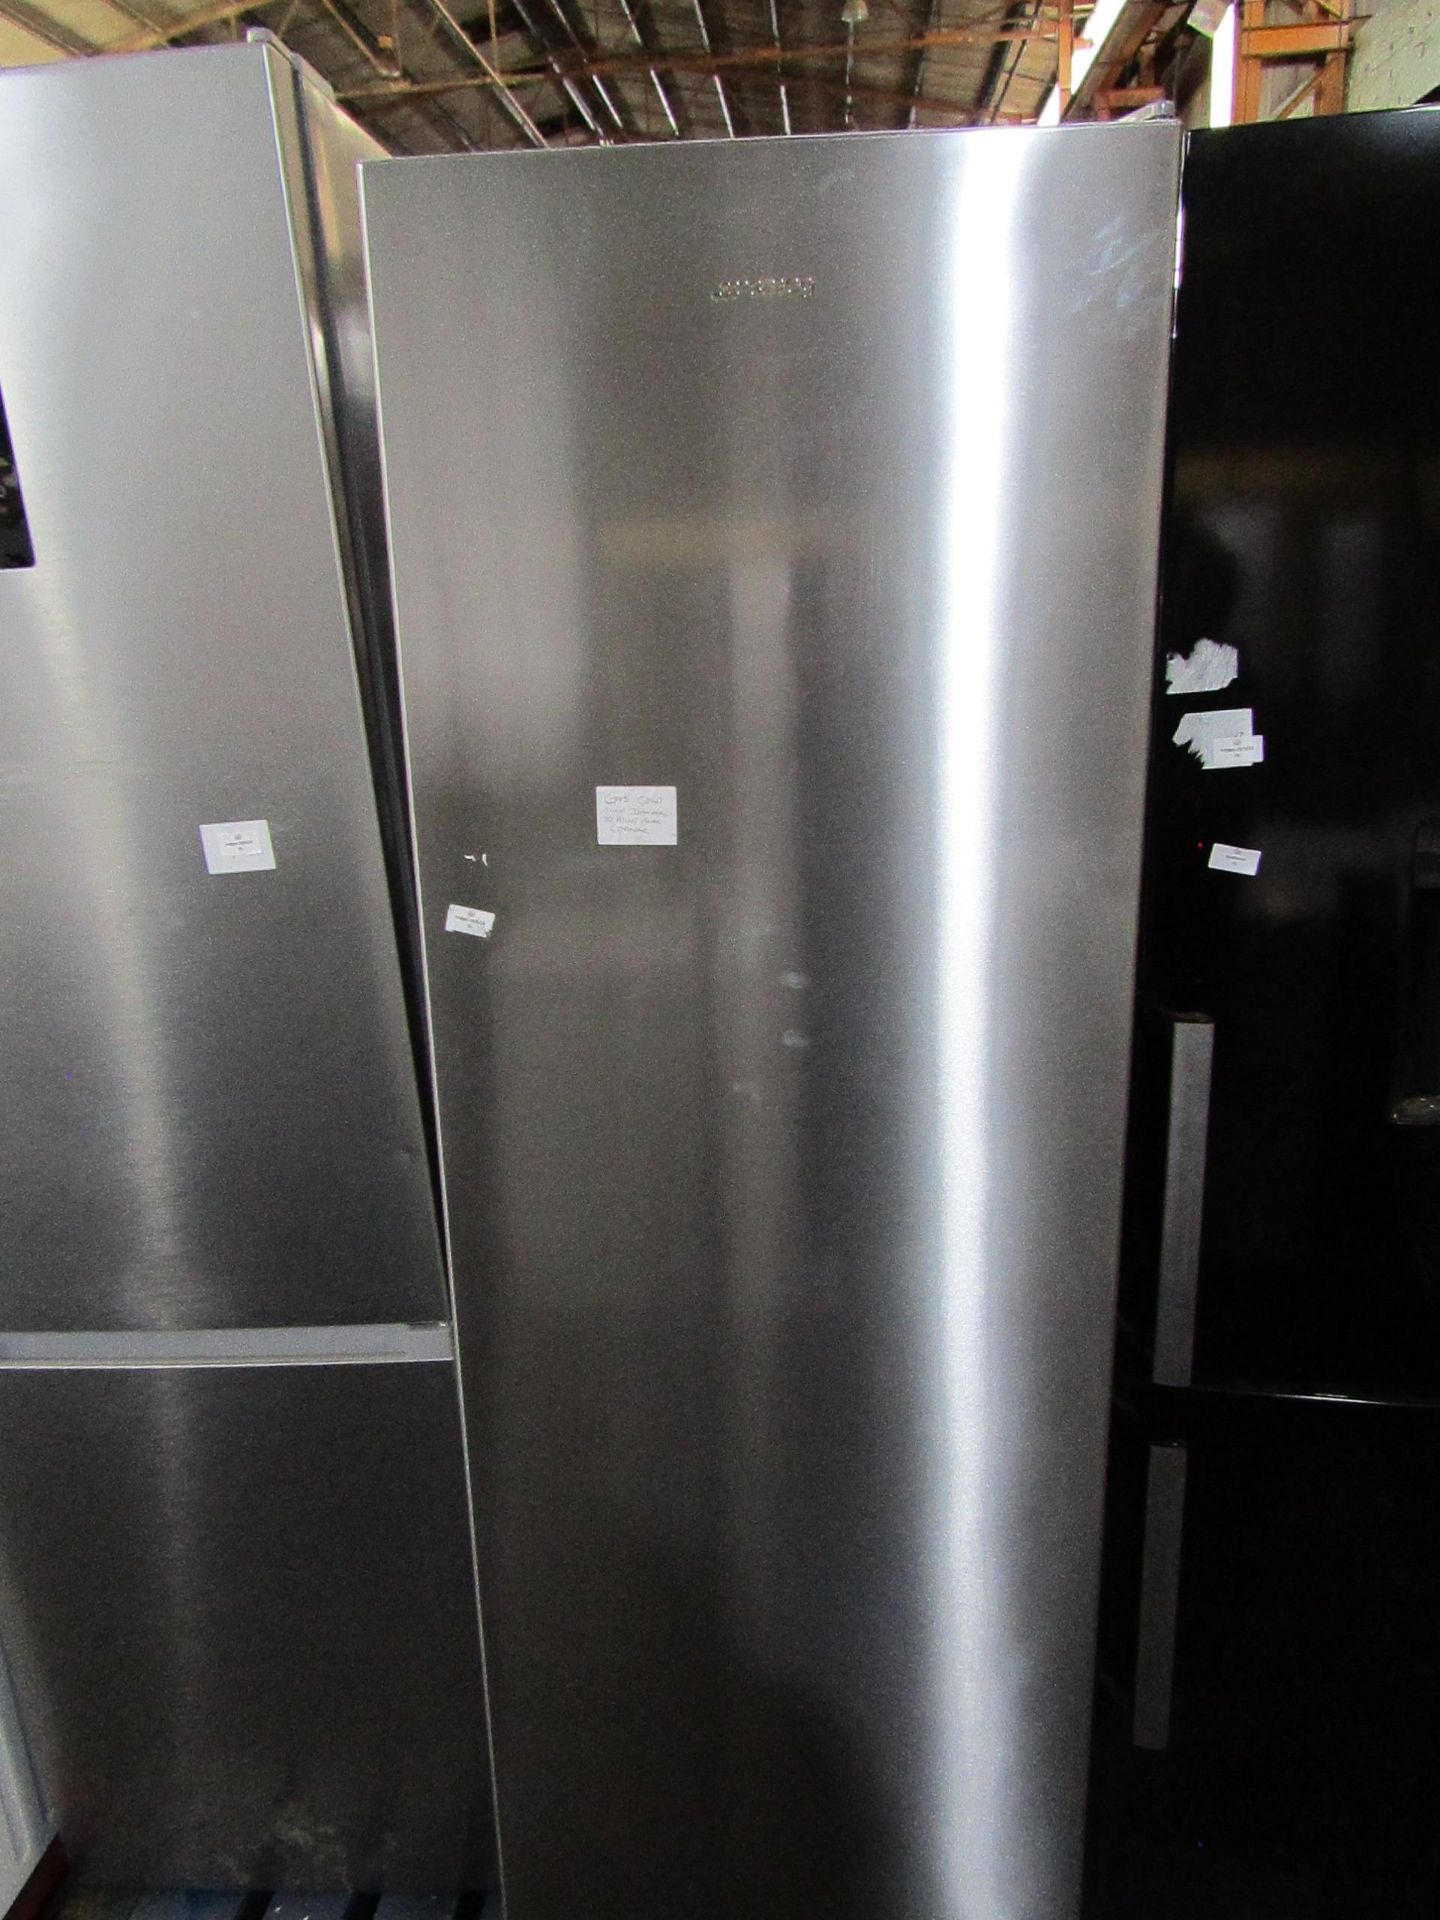 Smeg tall freestanding fridge, tested working but has exterior damage on the bottom corner.